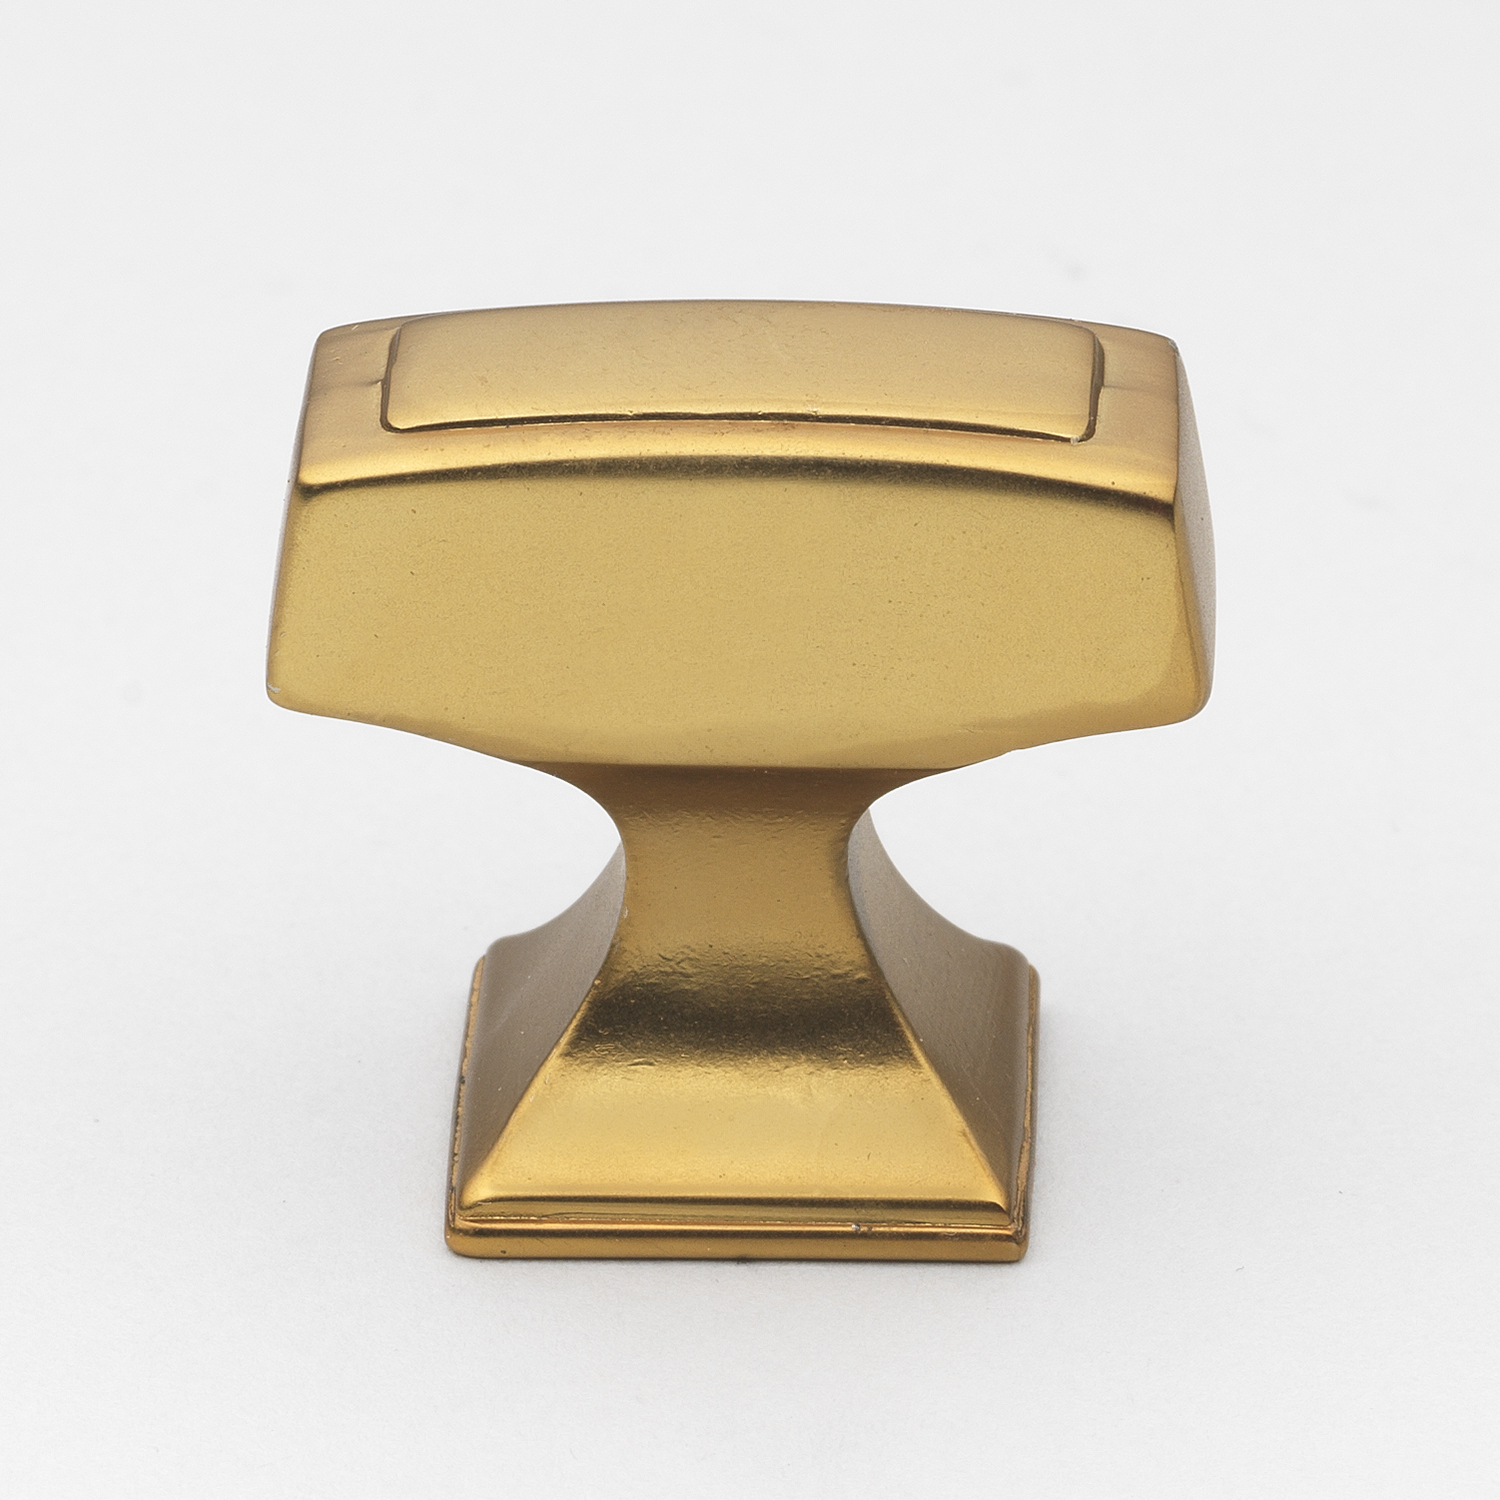 1-1/8 x 1/2 Inch Transition Rectangle Cabinet Knob, Brass Gold - 87390-BG -  GlideRite Hardware